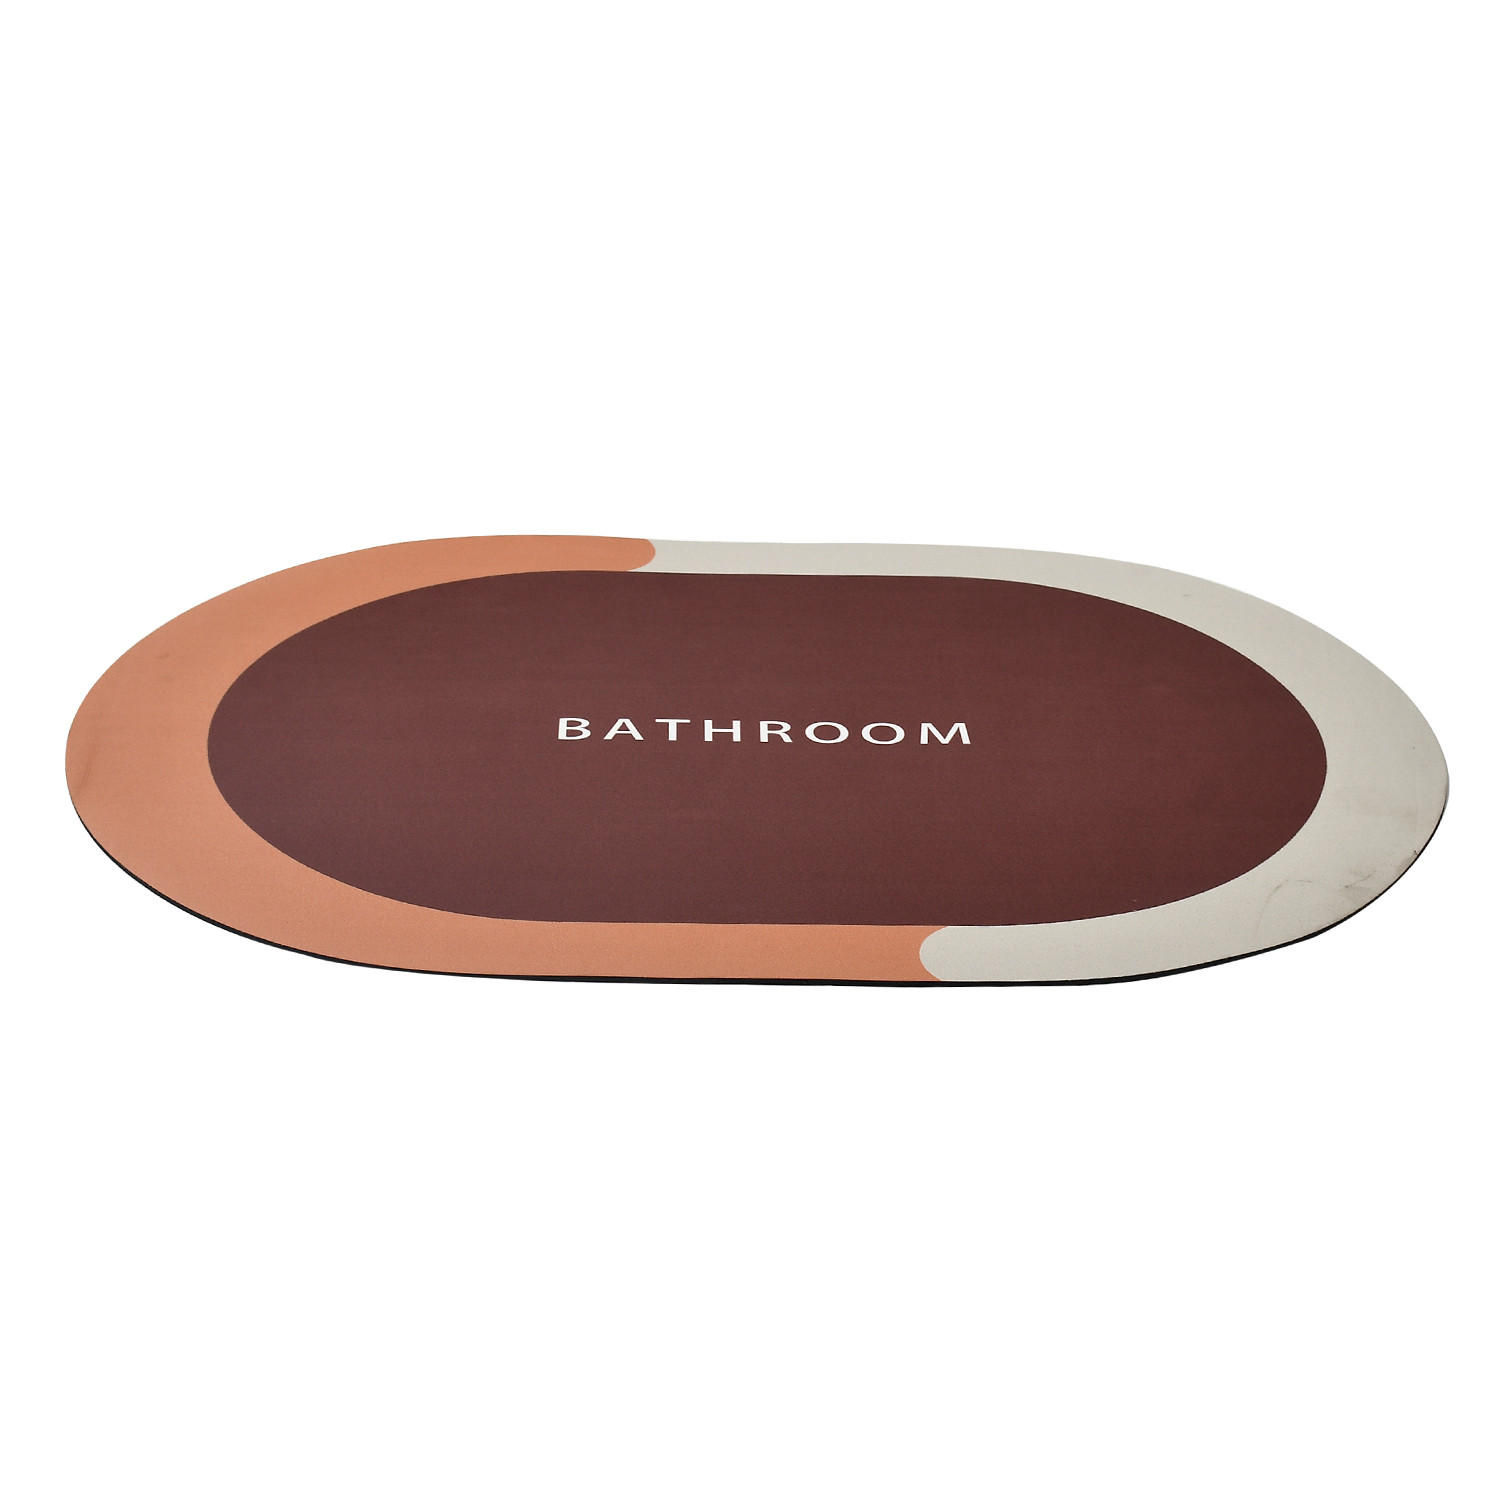 Kuber Industries Bathroom mat|Bathroom mat Super Absorbent Floor mat|Anti-skid Bathroom mat|Memory Foam Bathroom Rug Mat (Brown)